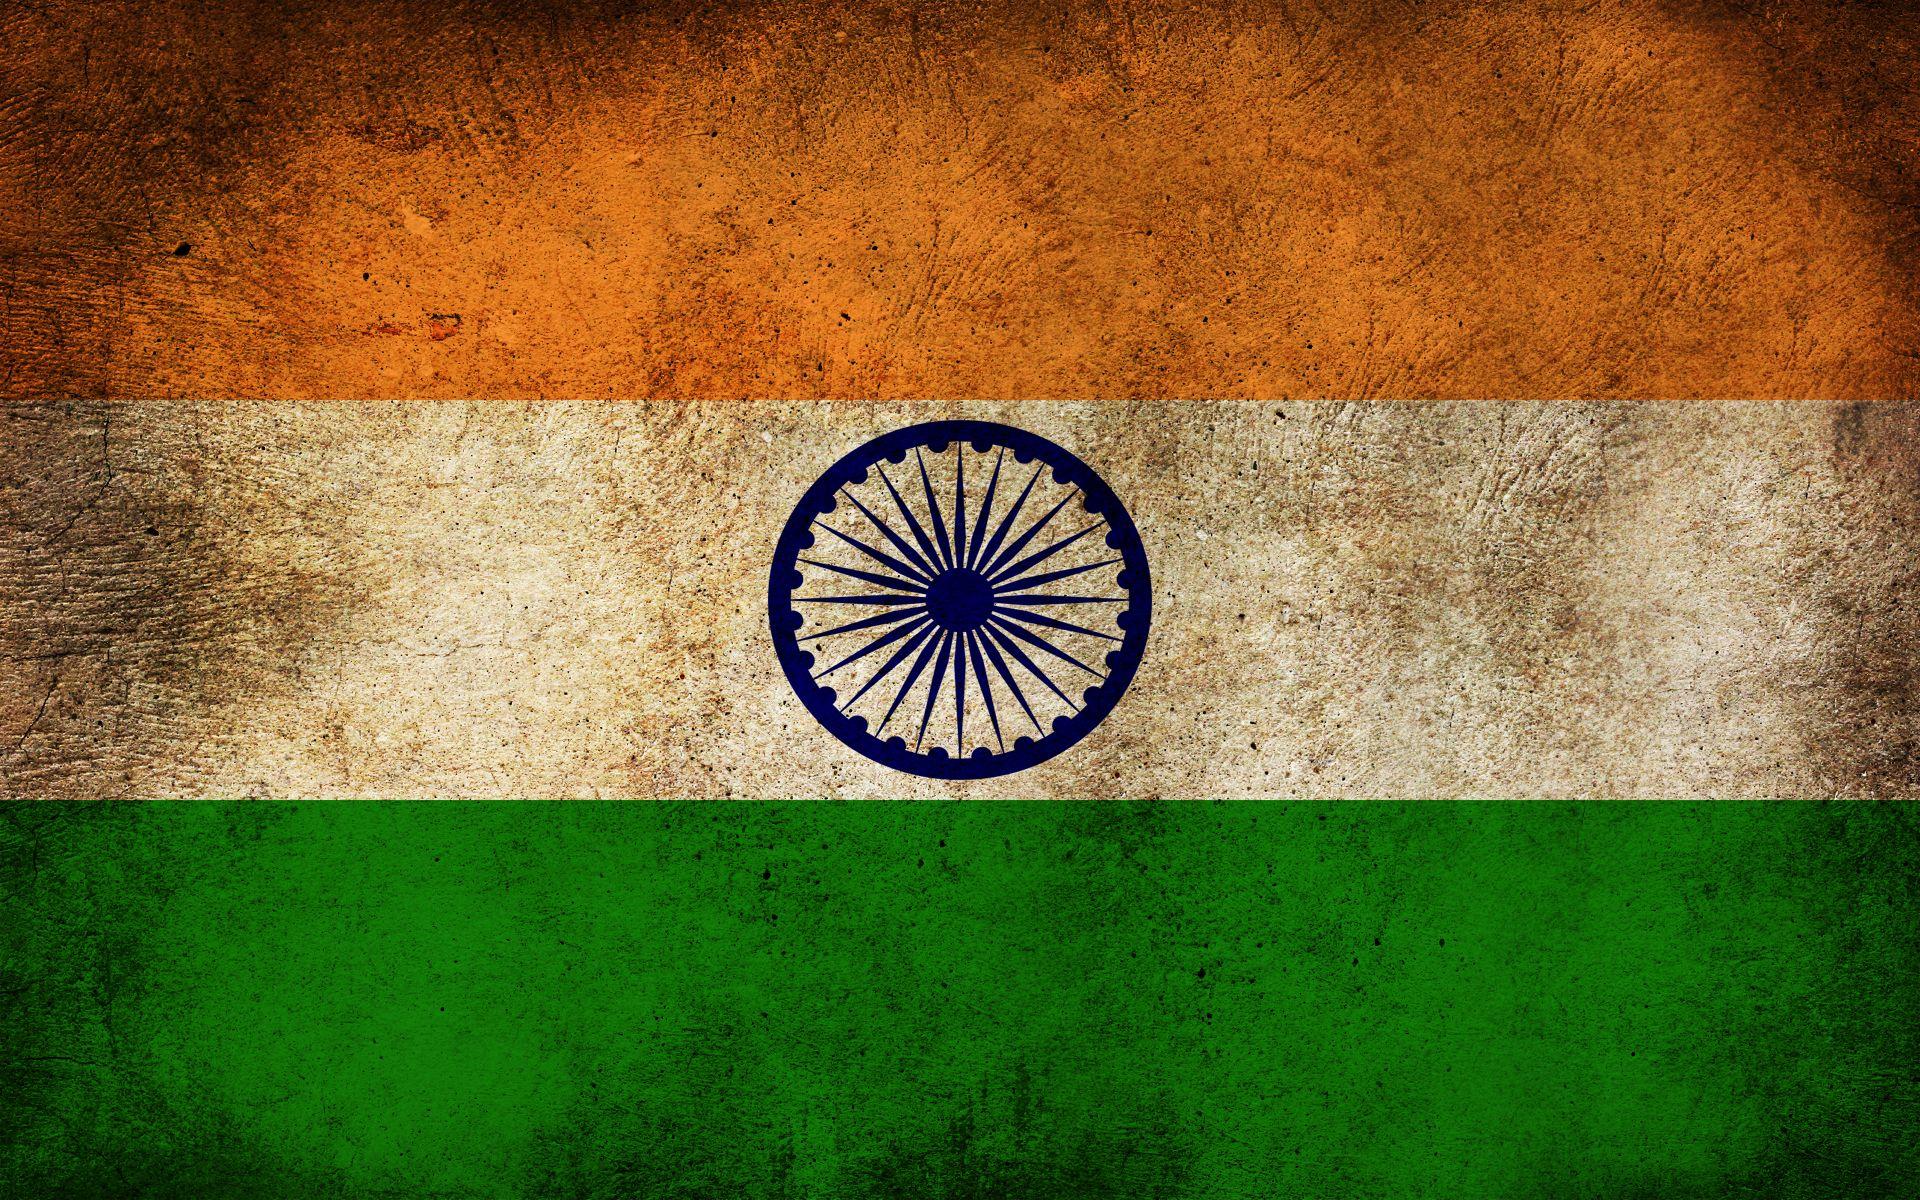 Wallpaper.wiki Indian Flag Wallpaper Free Download PIC WPD005459